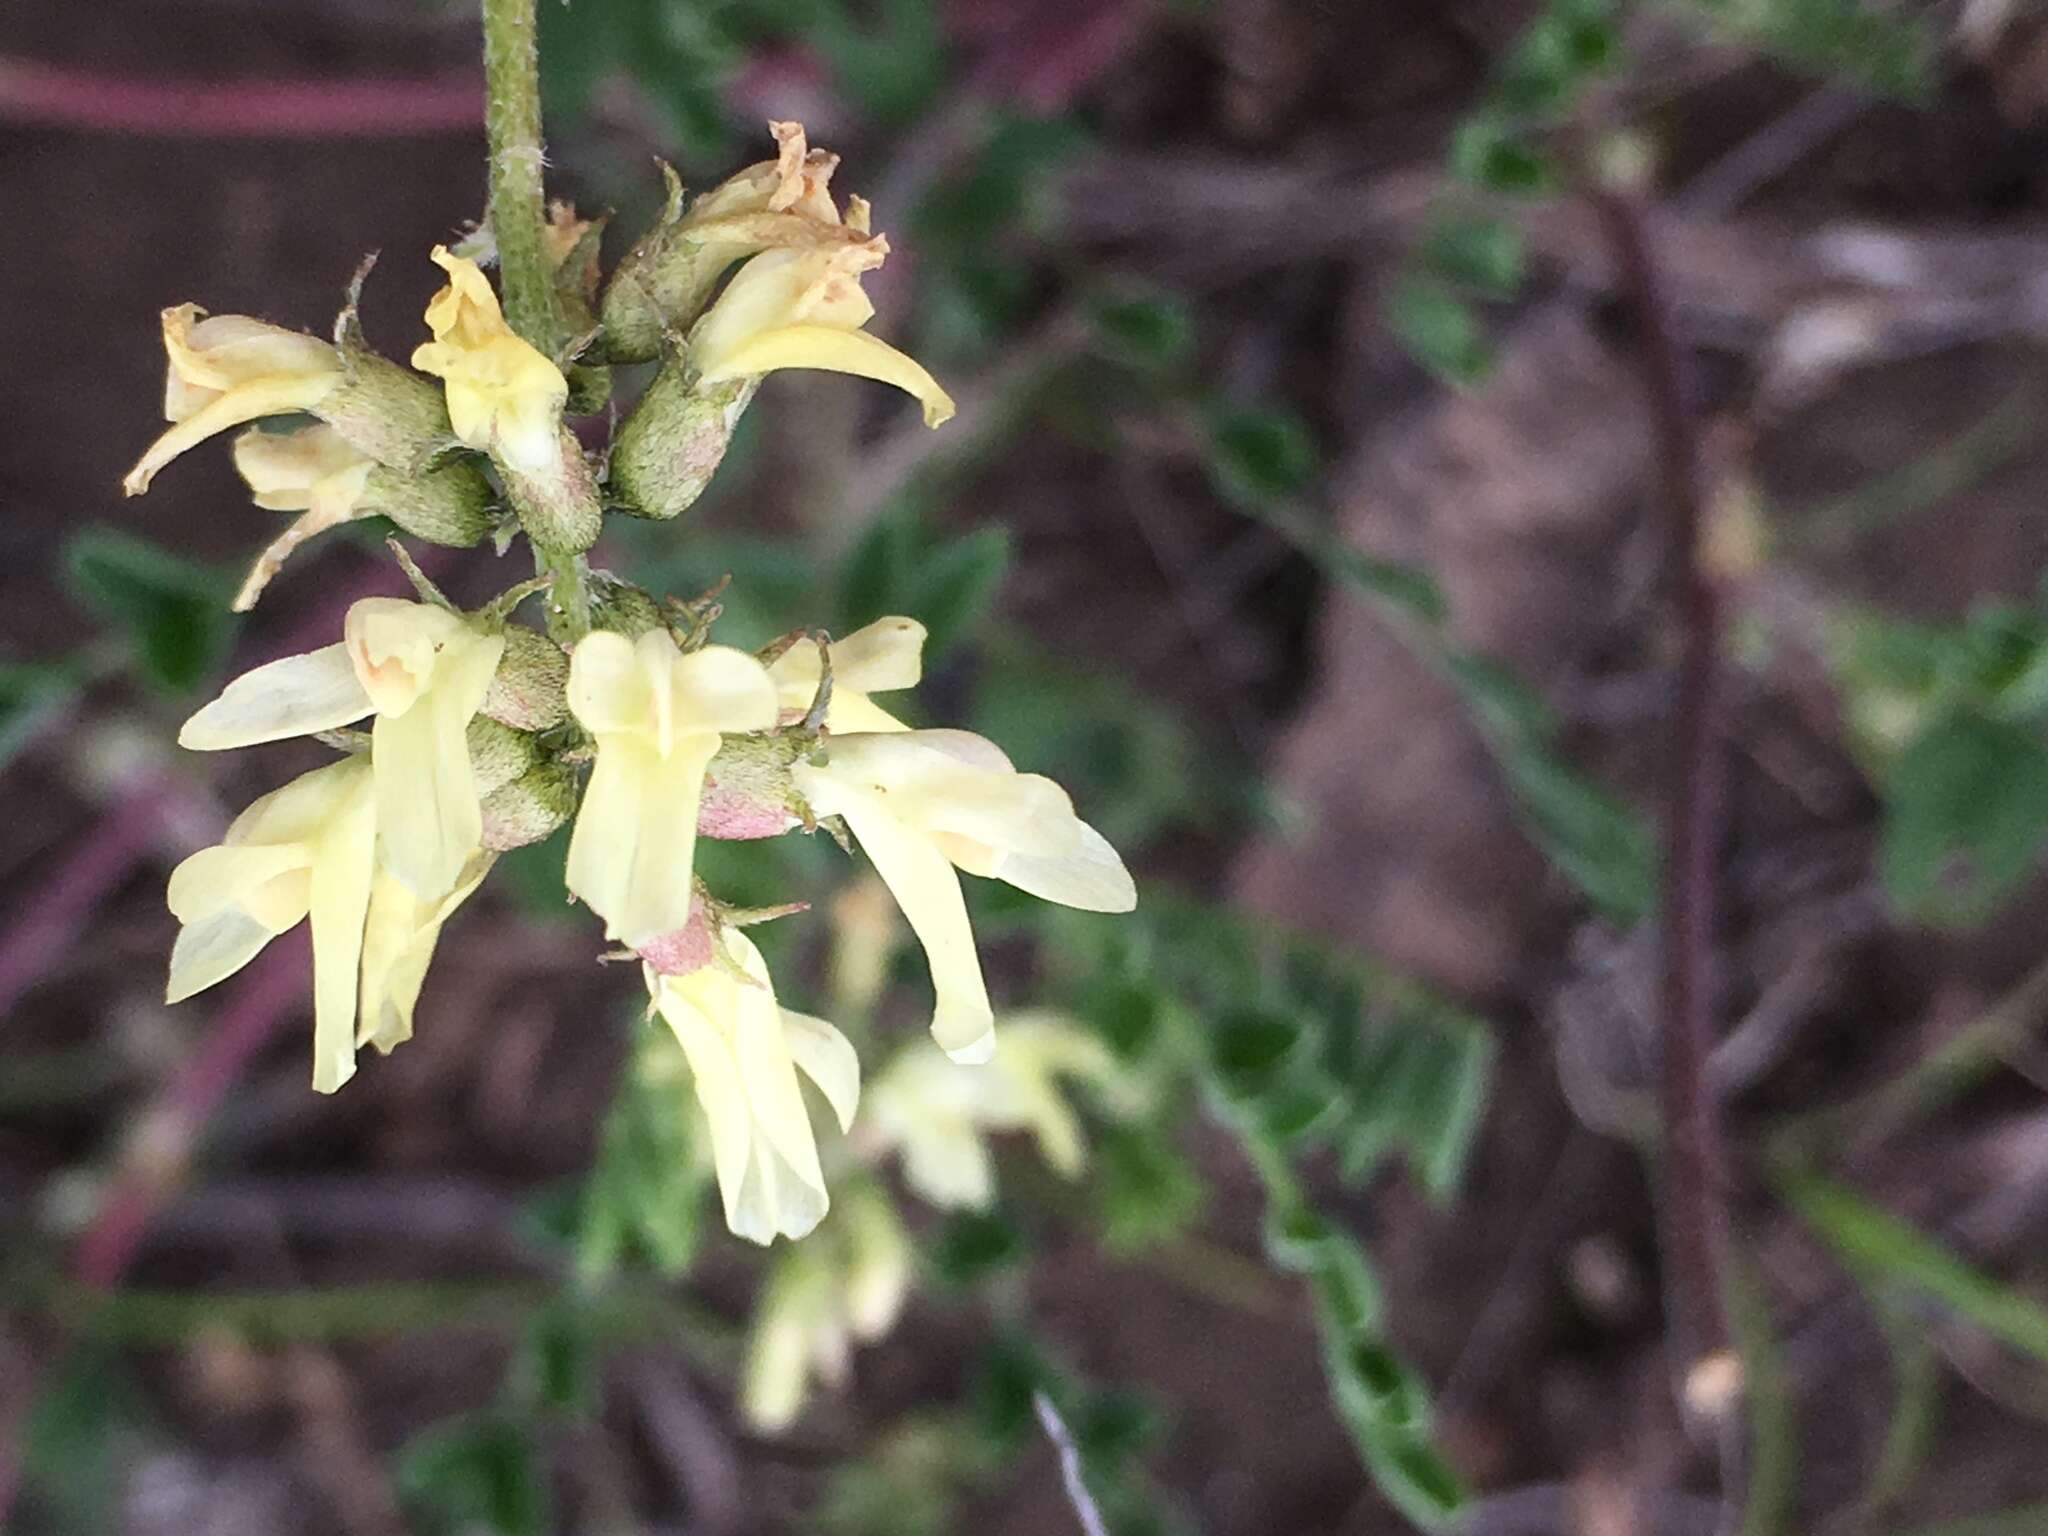 Imagem de Astragalus strigulosus Kunth